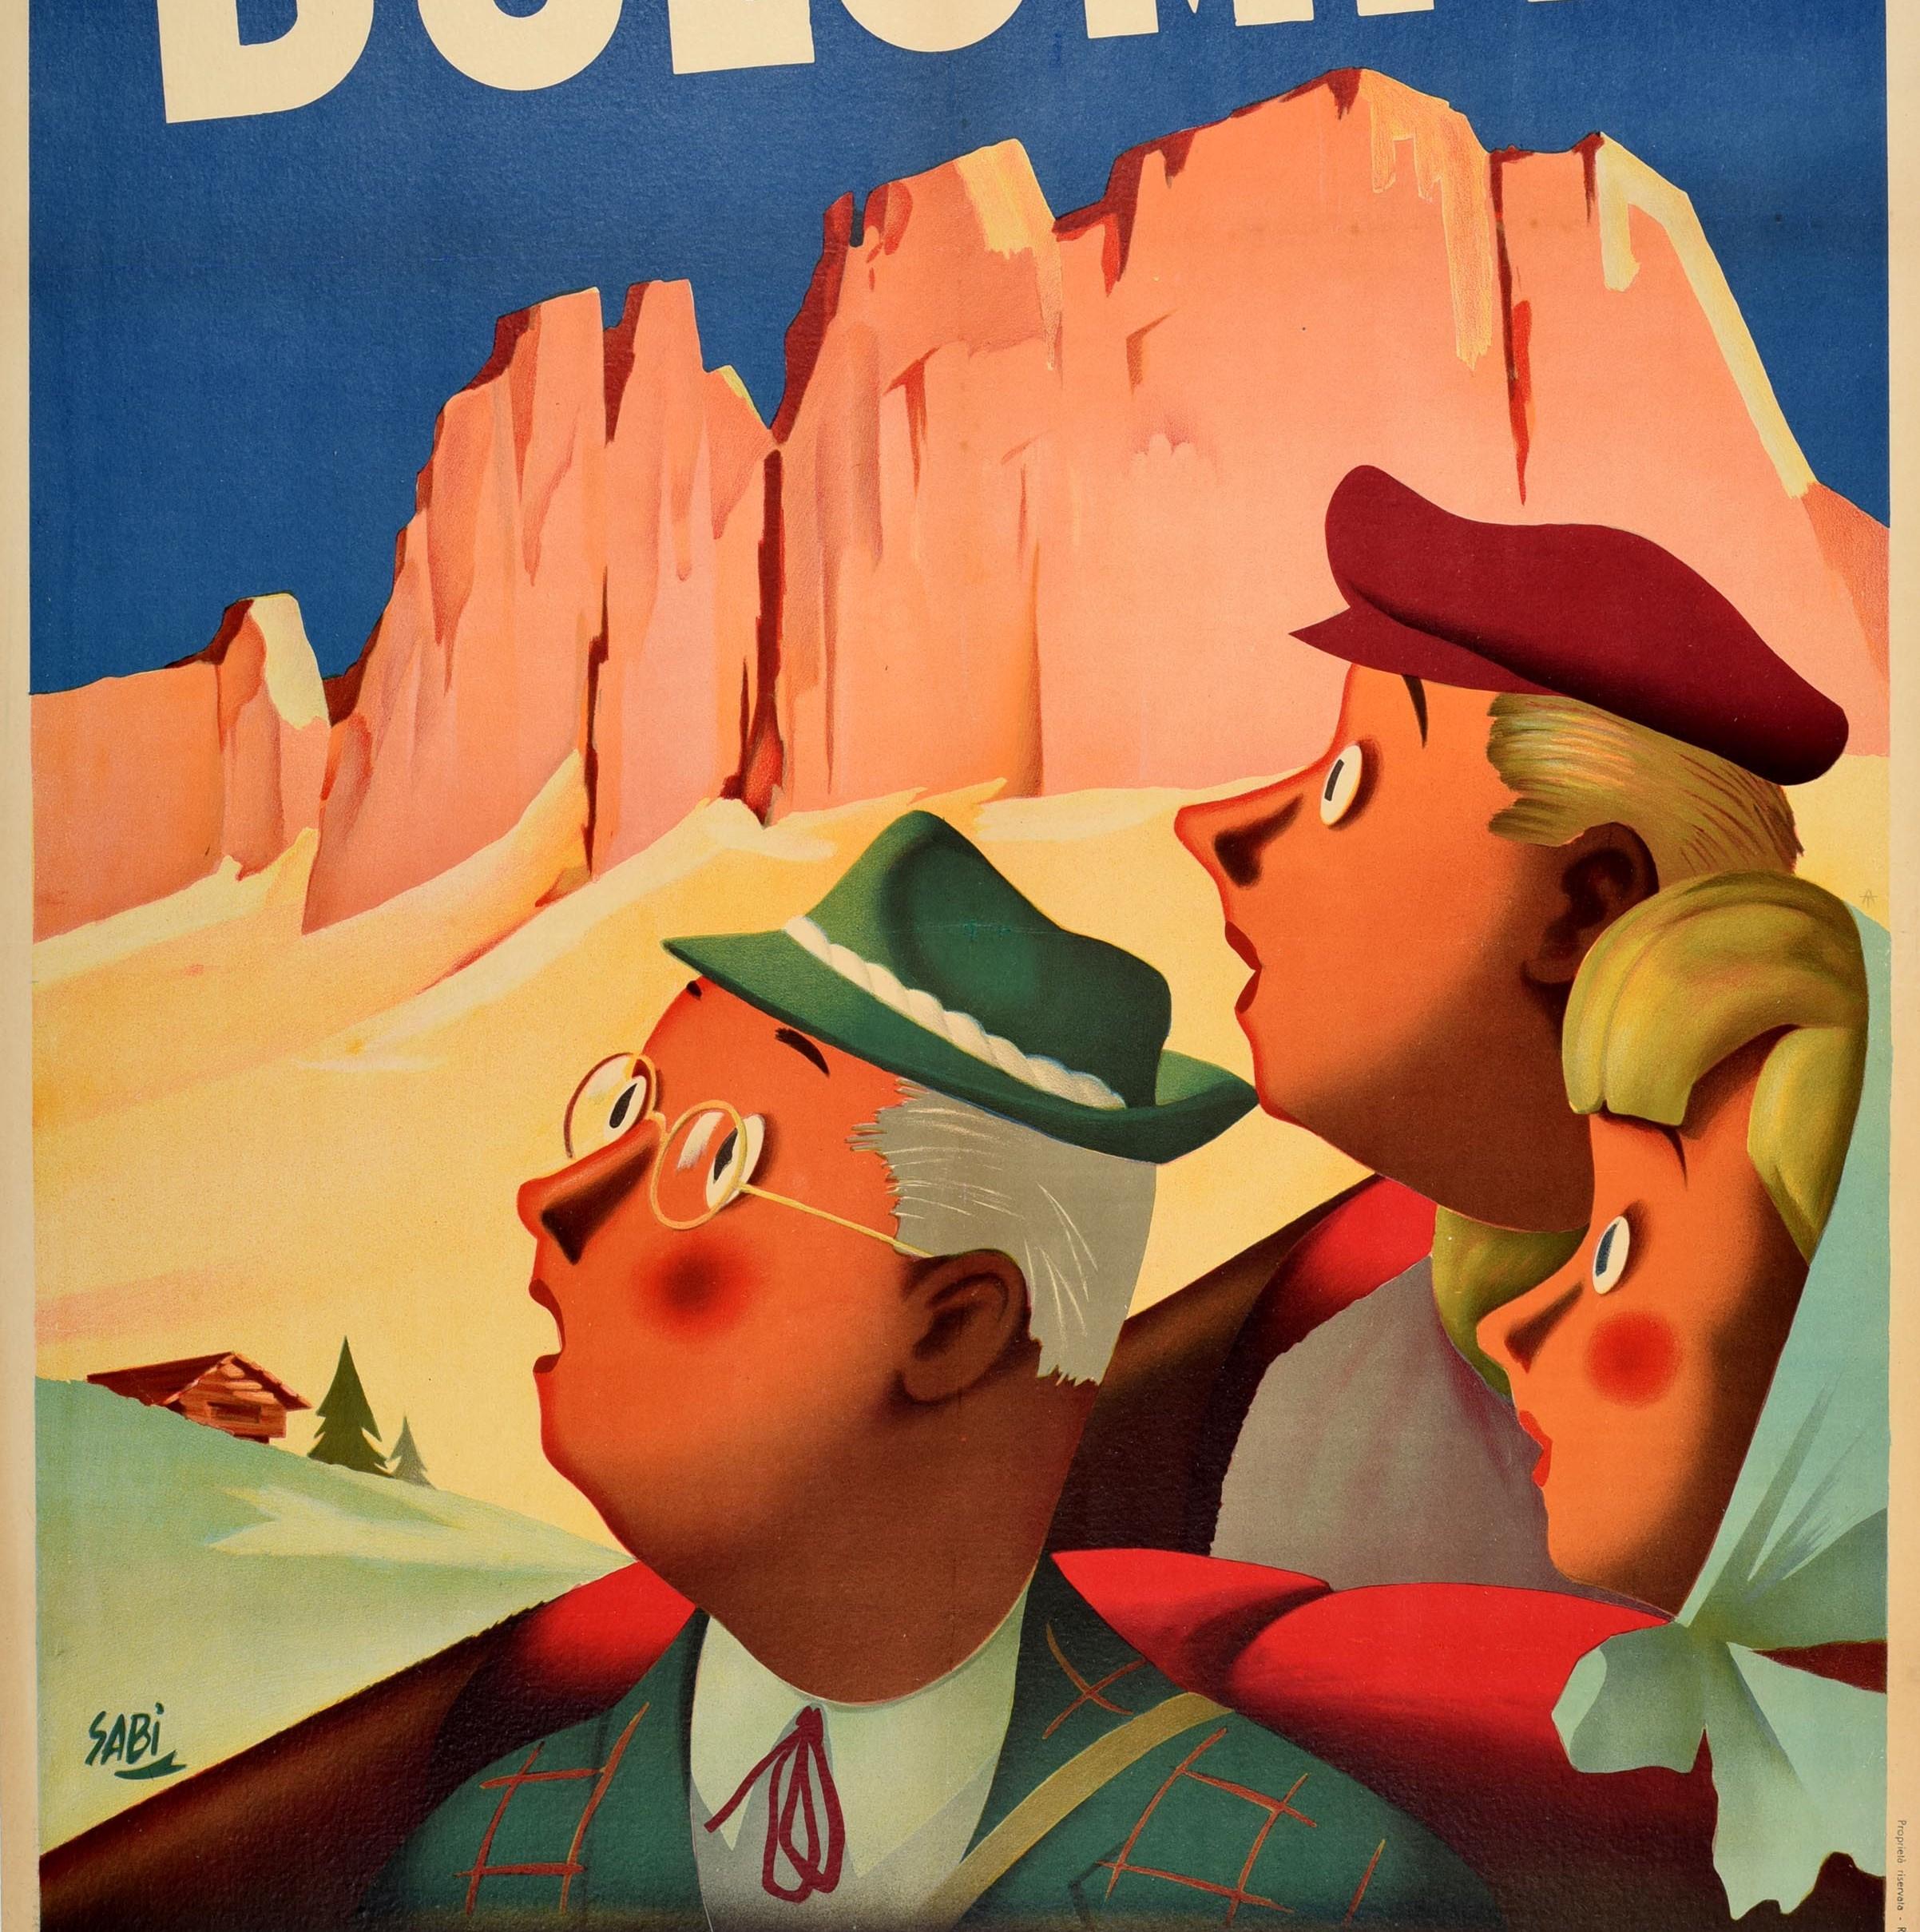 Italian Original Vintage Travel Poster Dolomiti Visit The Dolomites Italy Alps Mountains For Sale